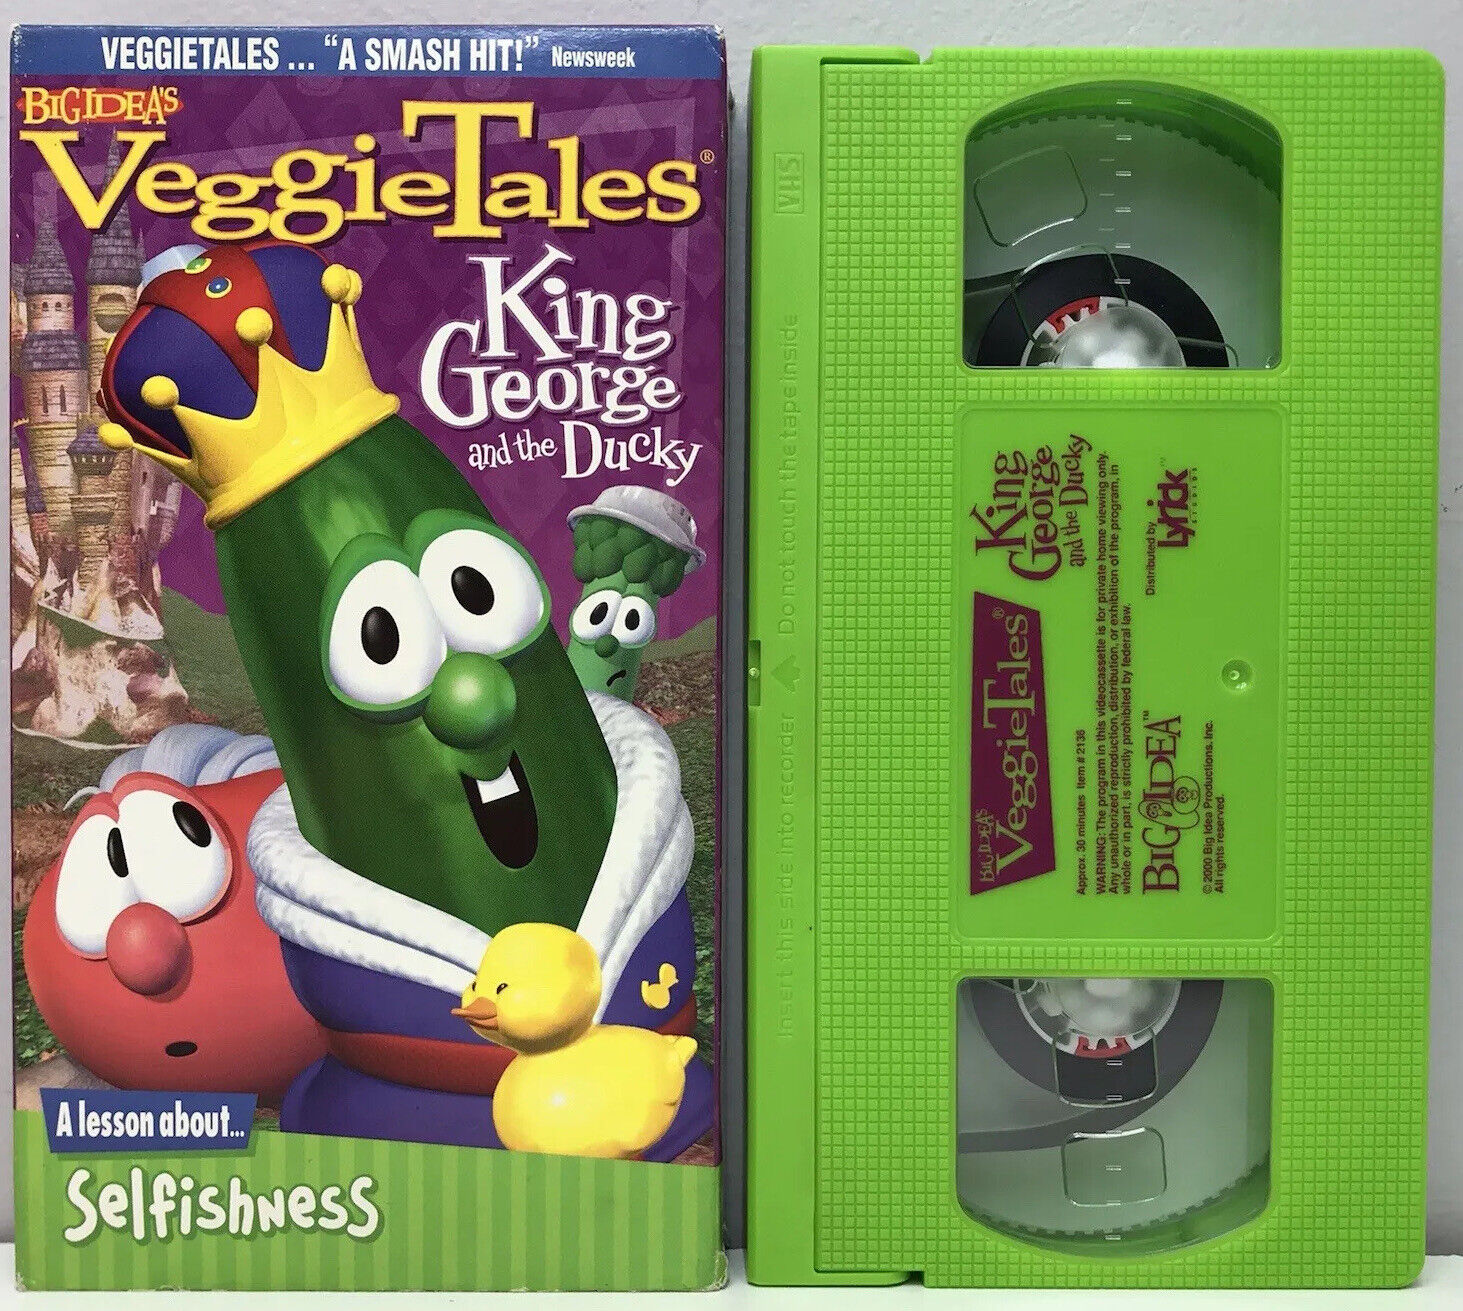 VeggieTales King George Ducky VHS Video Tape Christian Lesson Selfishness Green